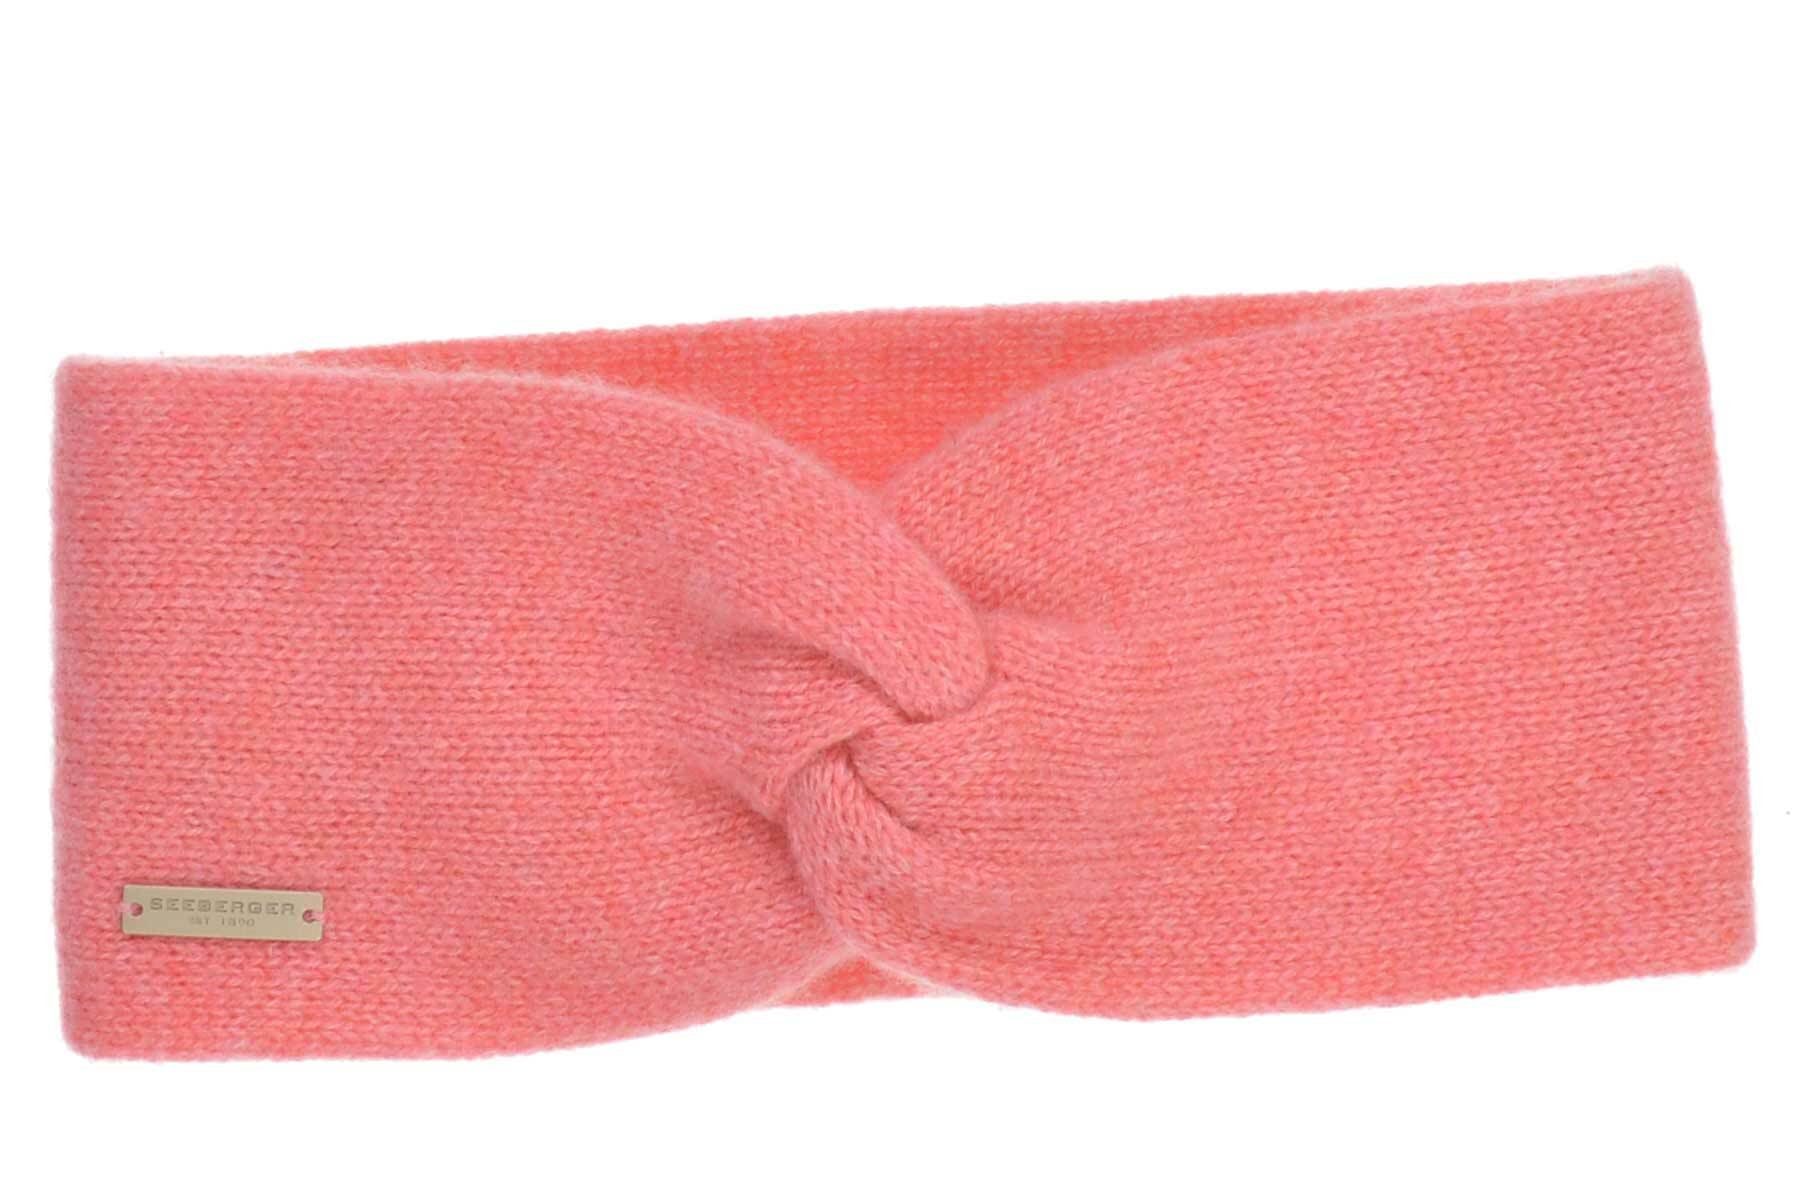 Seeberger Stirnband Cashmere Stirnband mit hummer 17325-0 Knotendetail